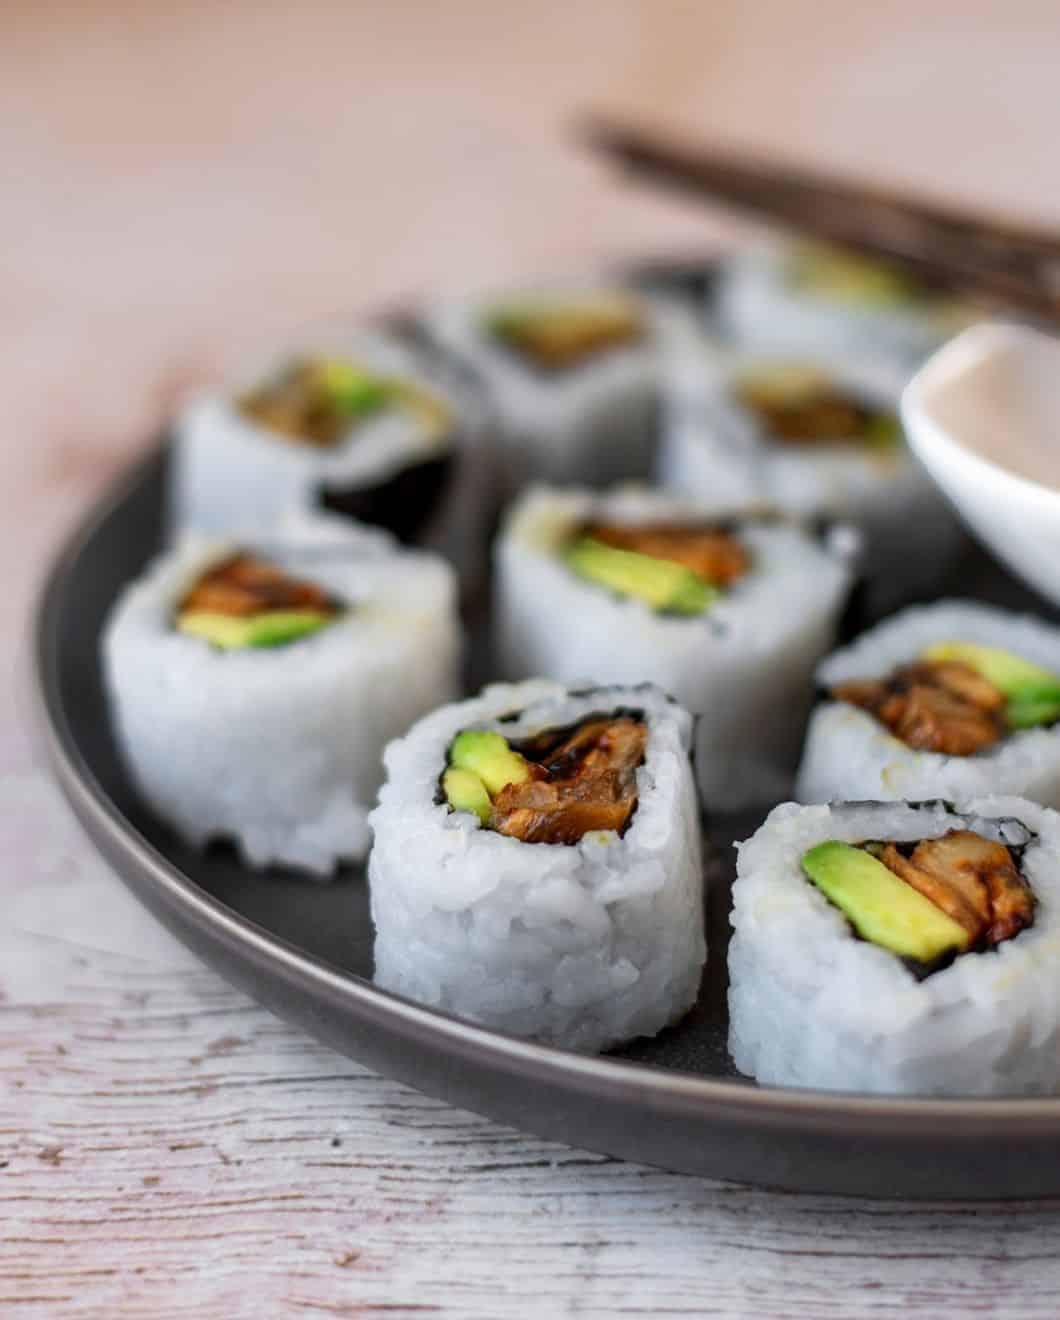 https://herbivoreskitchen.com/wp-content/uploads/2020/11/Vegan-Sushi-Recipes-Unagi-Rolls-with-Miso-Glazed-Eggplant-Instagram.jpg